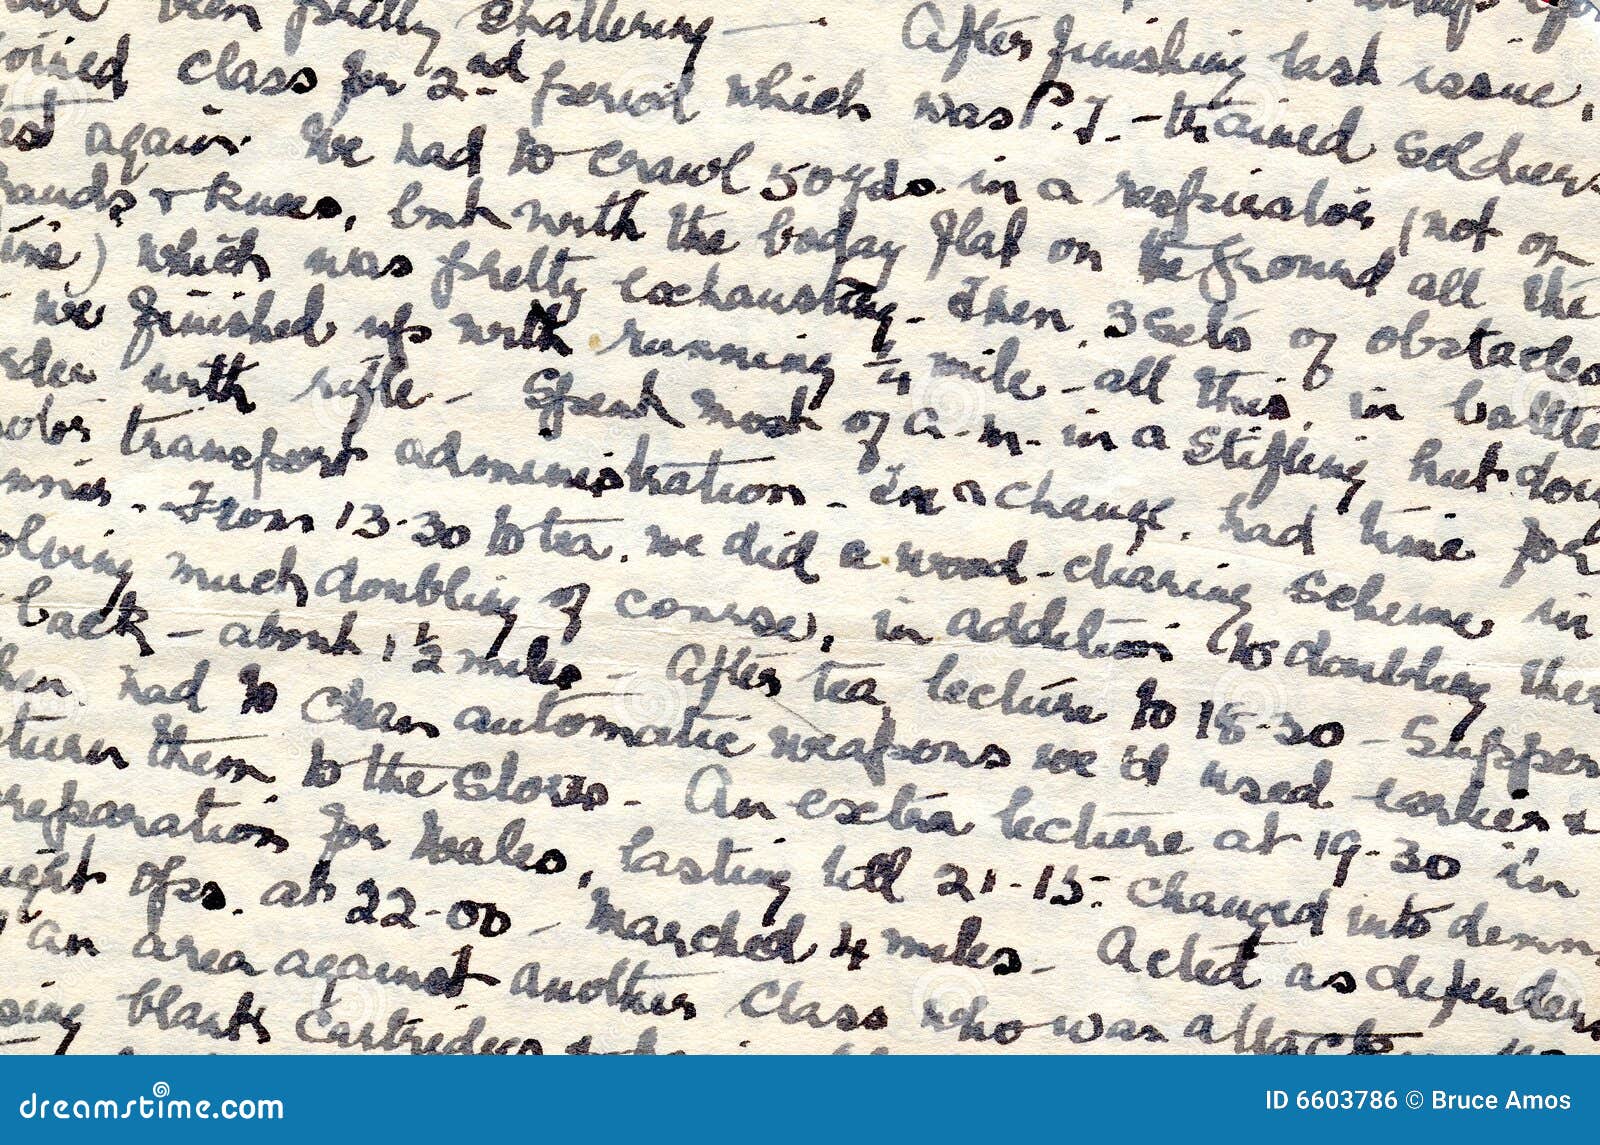 wartime diary handwriting